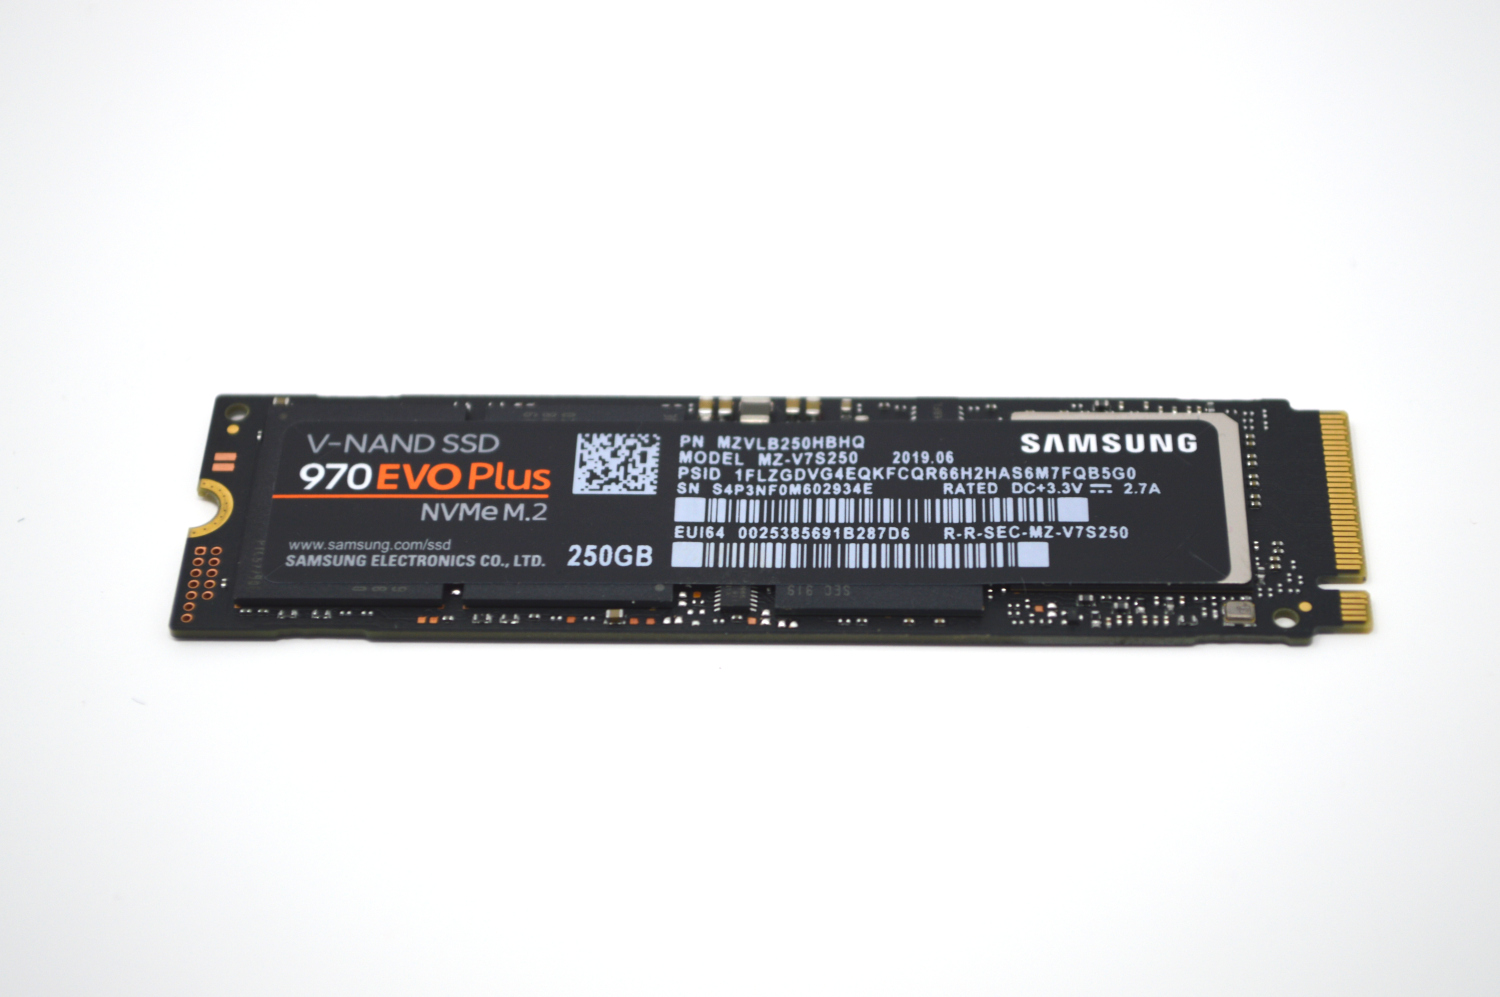 Samsung 970 EVO Plus 250GB NVMe SSD Review - ServeTheHome